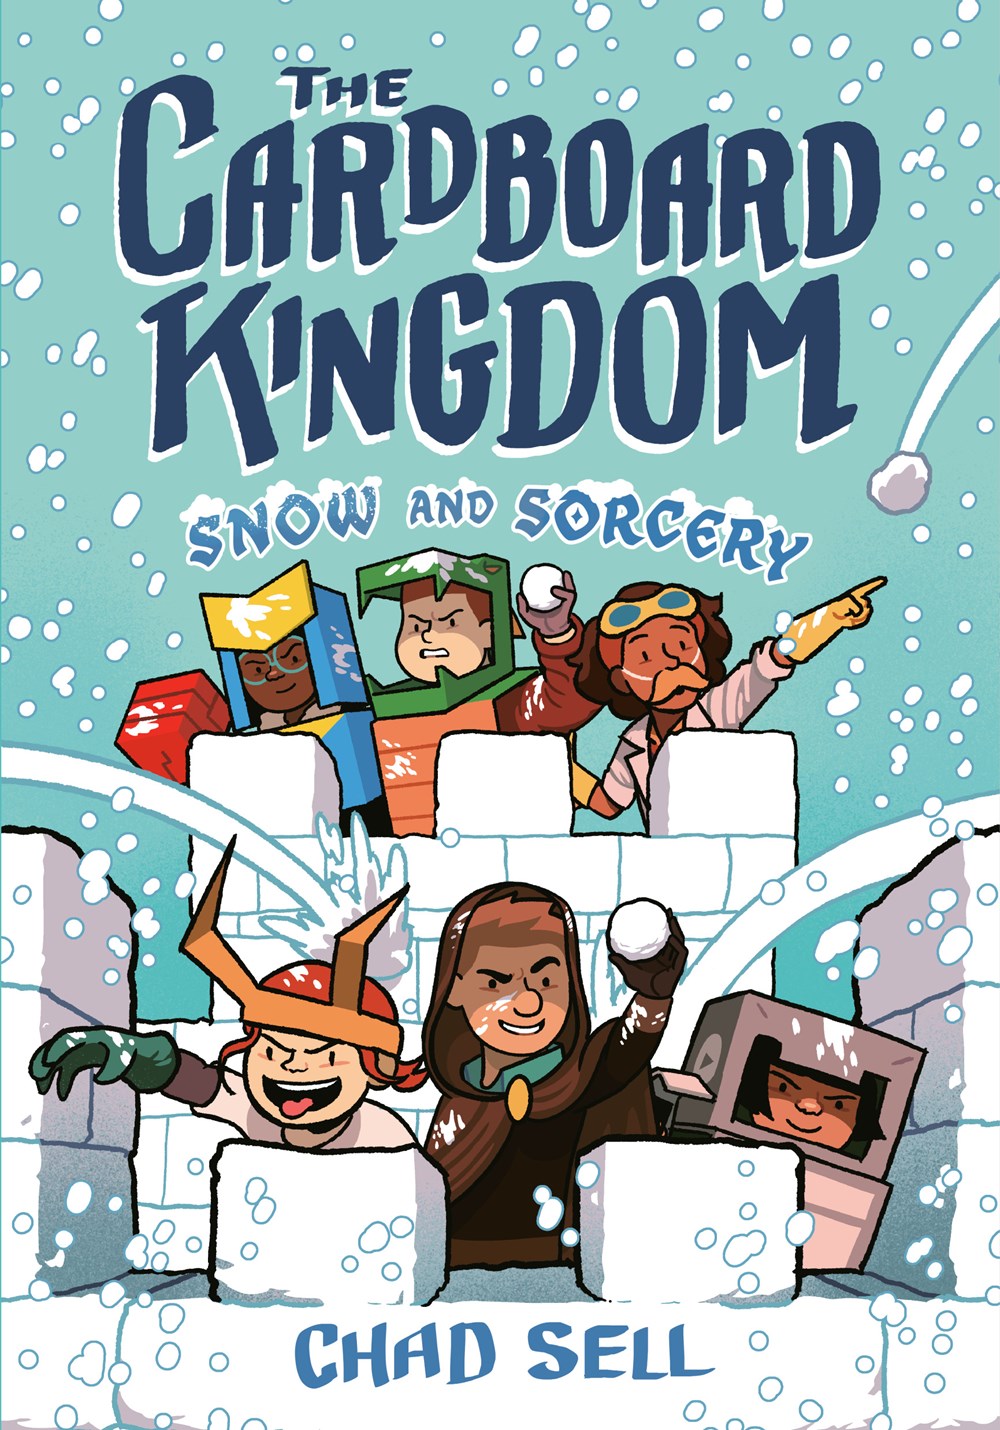 The Cardboard Kingdom #3 Snow and Sorcery - Chad Sell